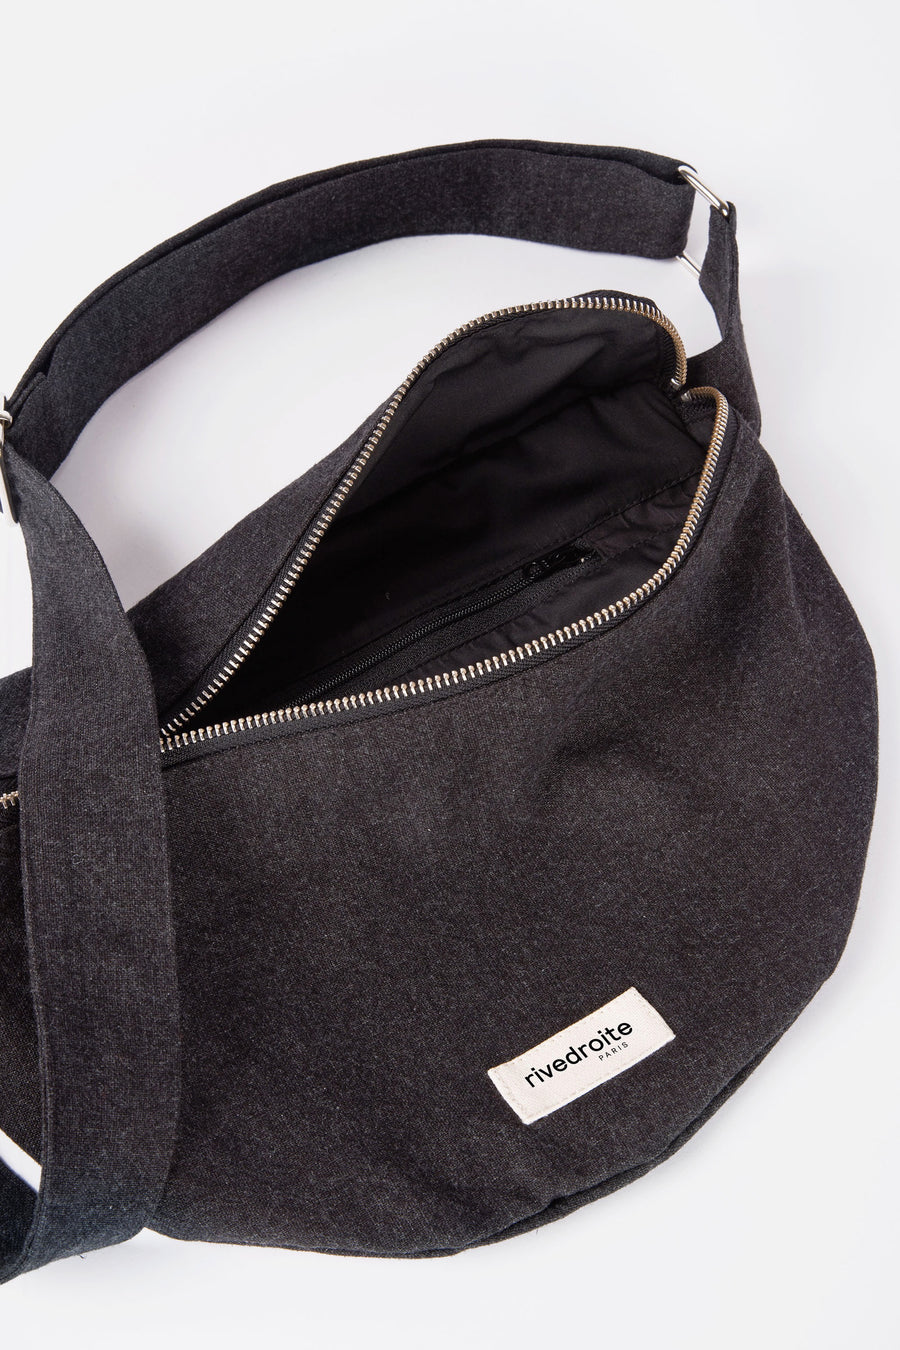 Rivedroite Custine XL The Waist Bag - Black